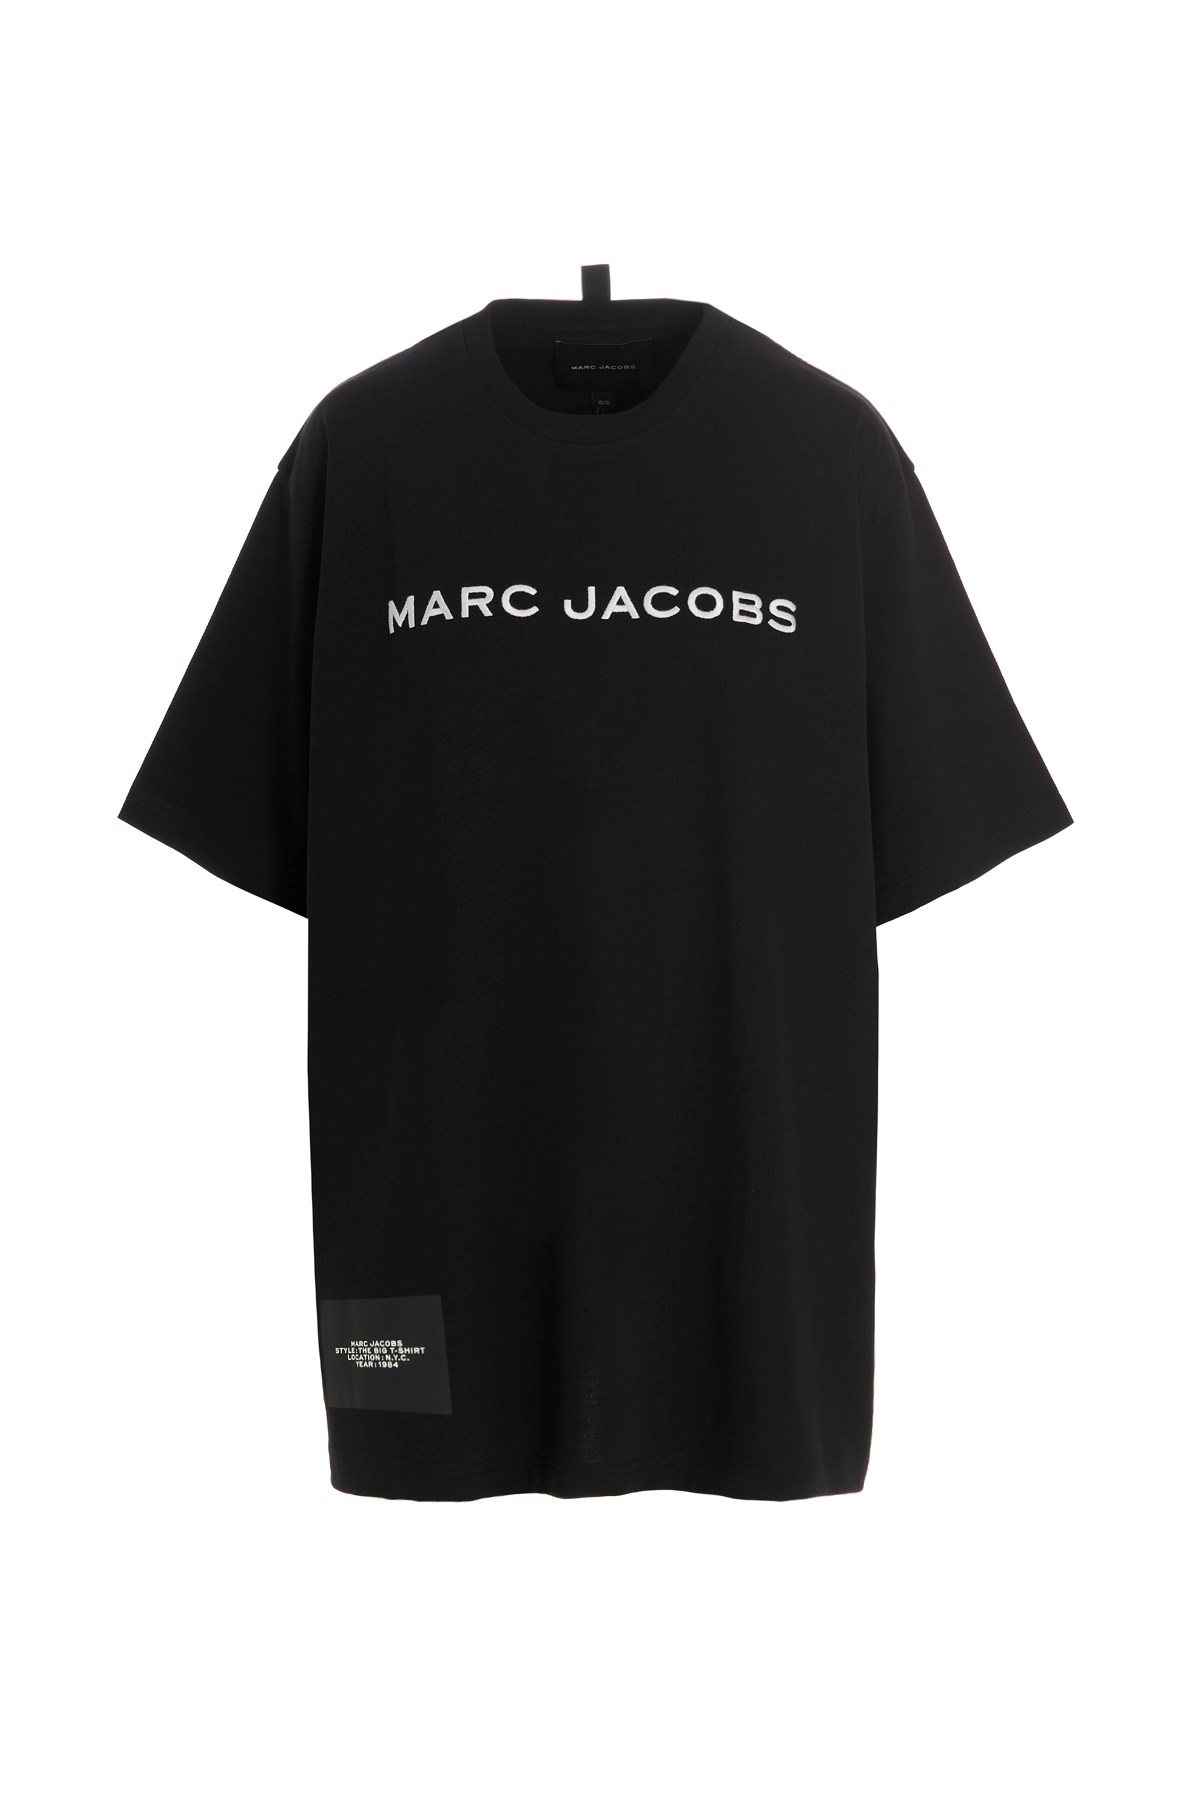 MARC JACOBS T-Shirt Mit Logostickerei